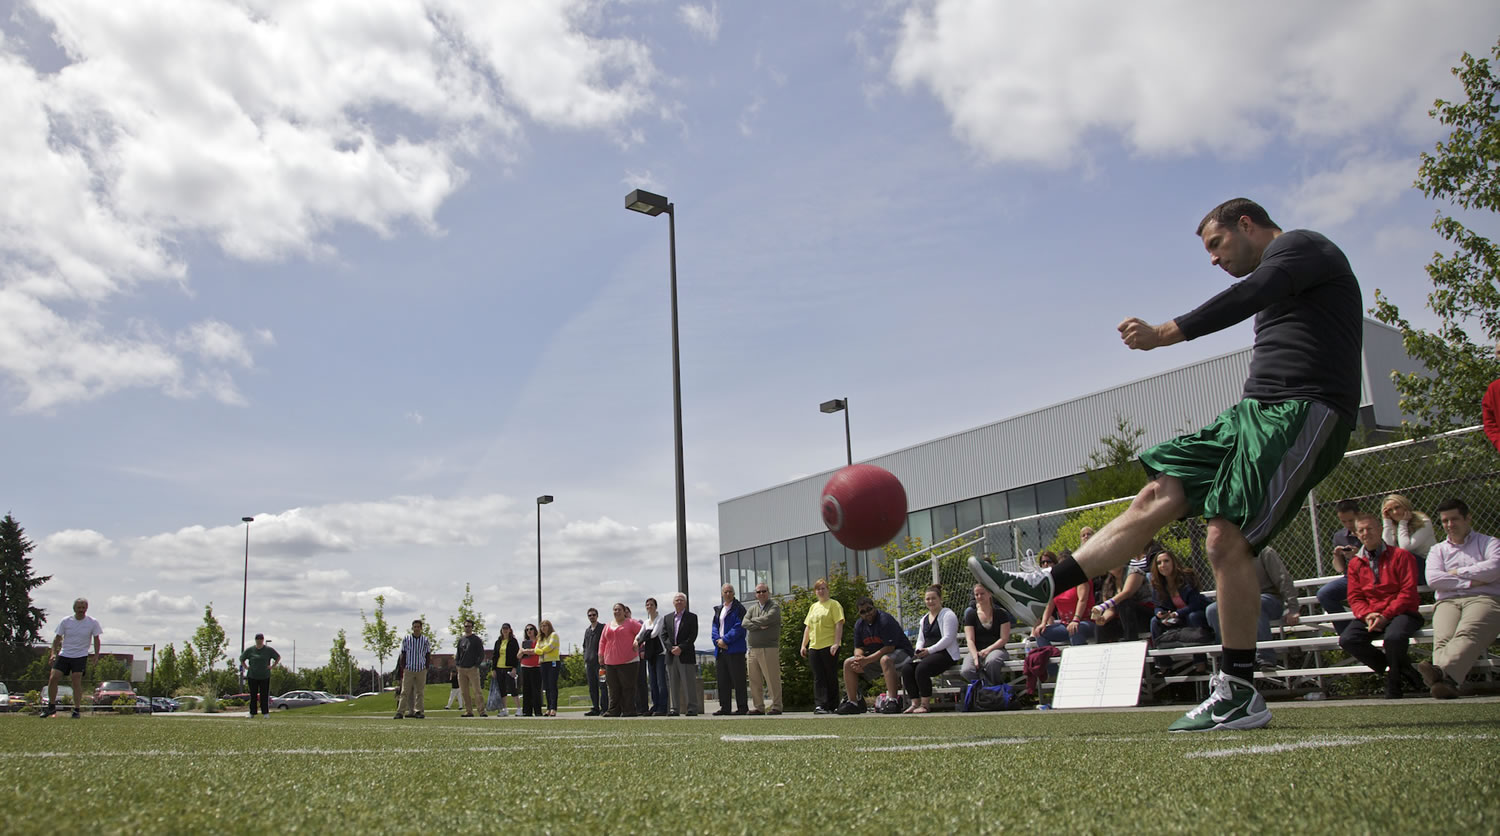 Dennison Harris kicks a ball during an employee kickball game last week at Nautilus in Vancouver.